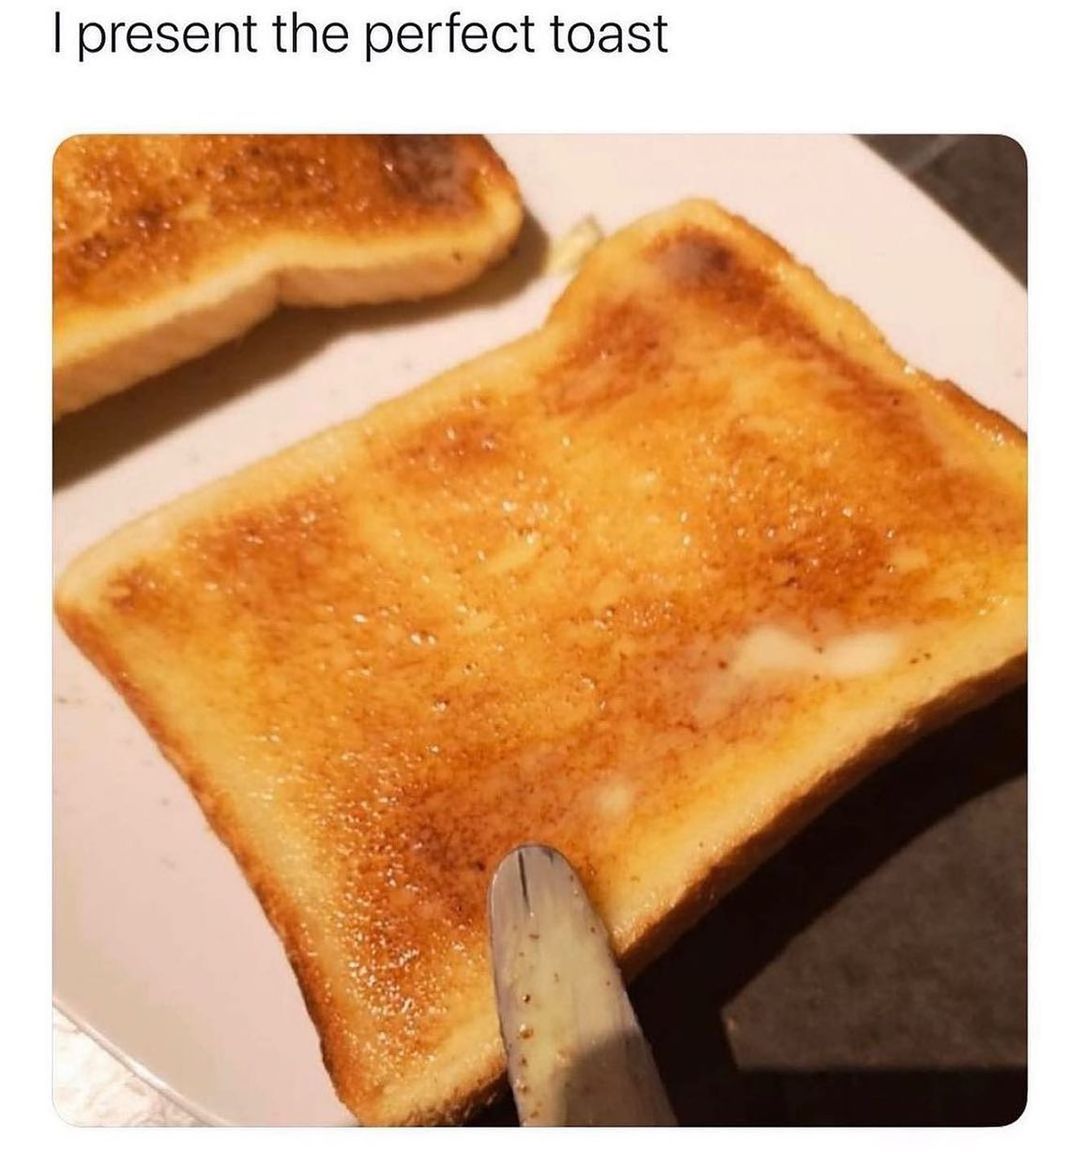 I present the perfect toast.